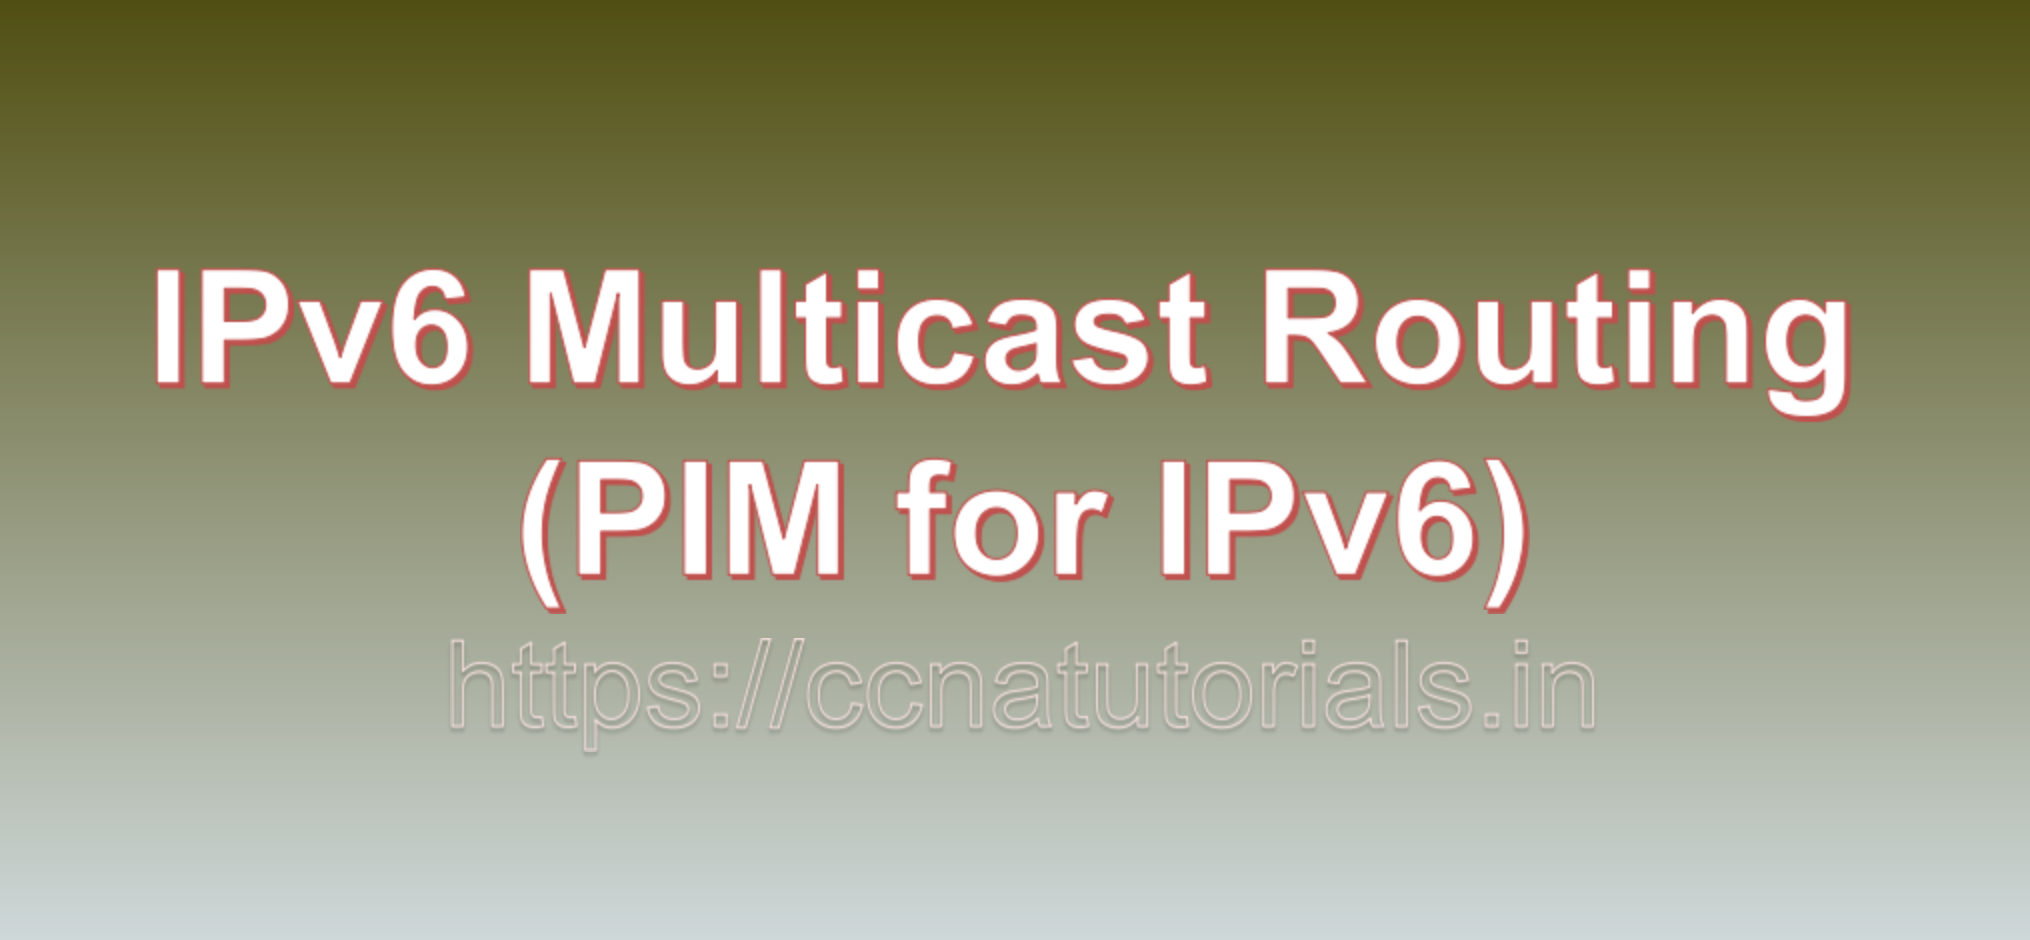 IPv6 Multicast Routing (PIM for IPv6), ccna, ccna tutorials